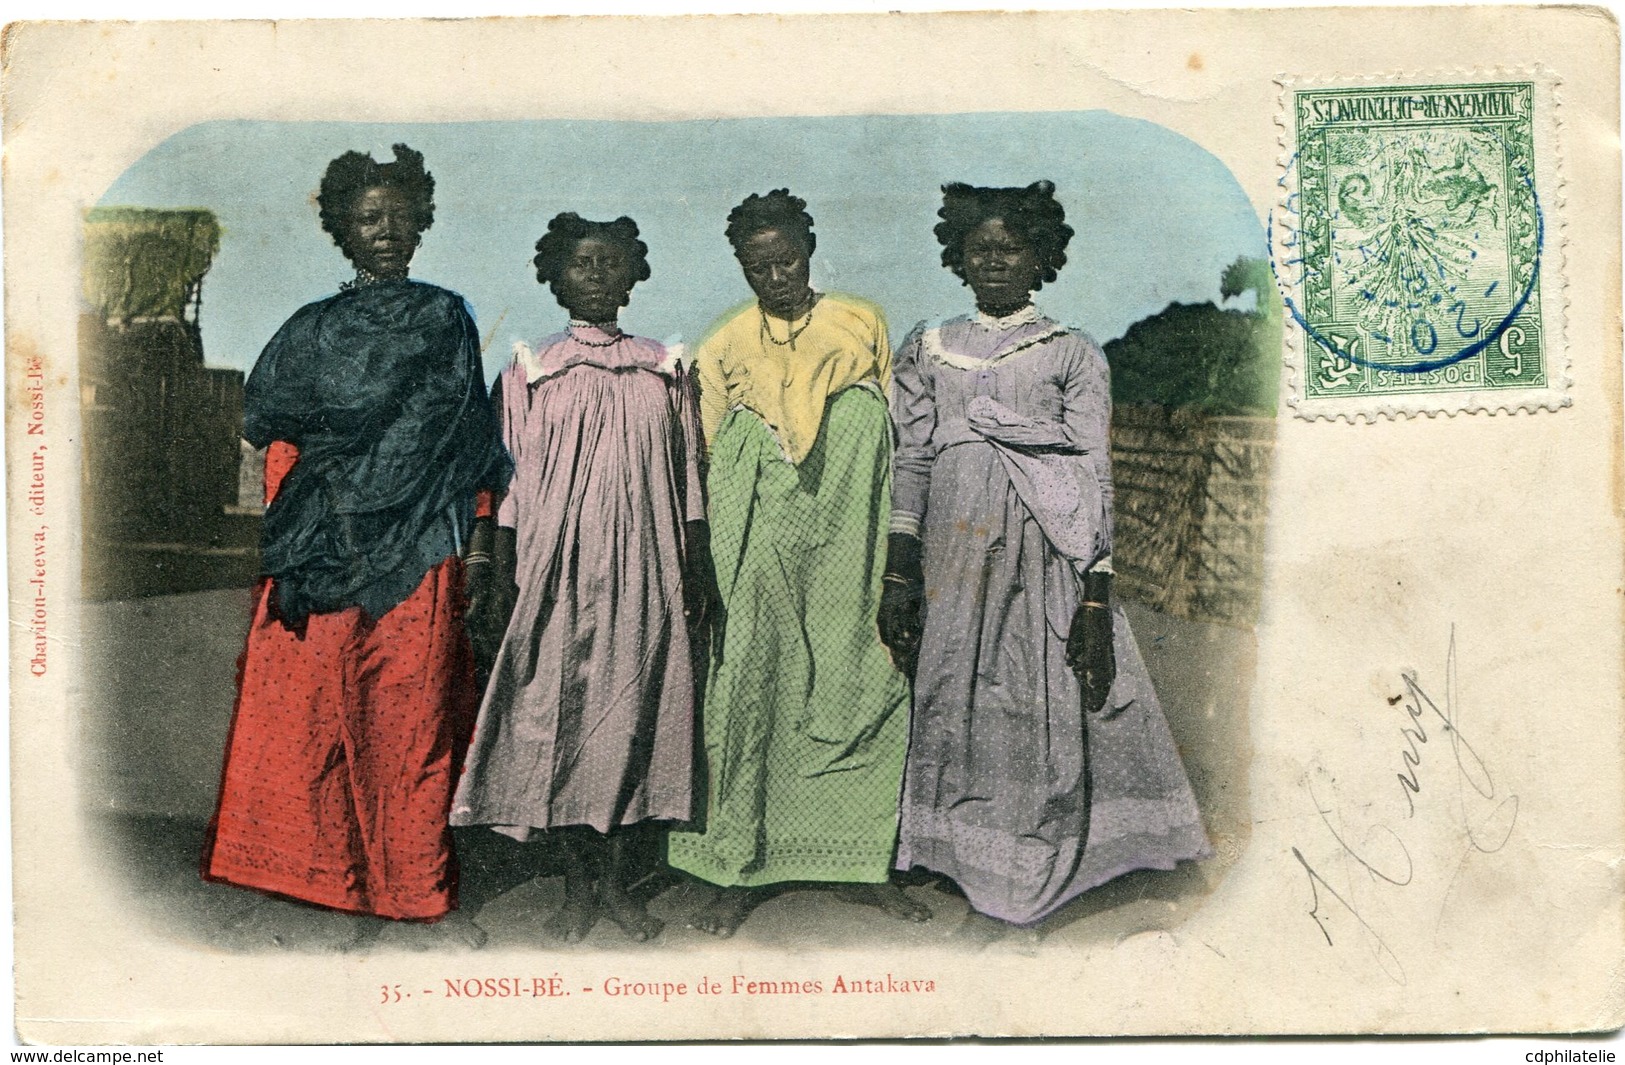 MADAGASCAR CARTE POSTALE DE NOSSI-BE GROUPE DE FEMMES ANTAKAVA DEPART -20- 18 JUIN 06 MADAGASCAR POUR LE TONKIN - Storia Postale